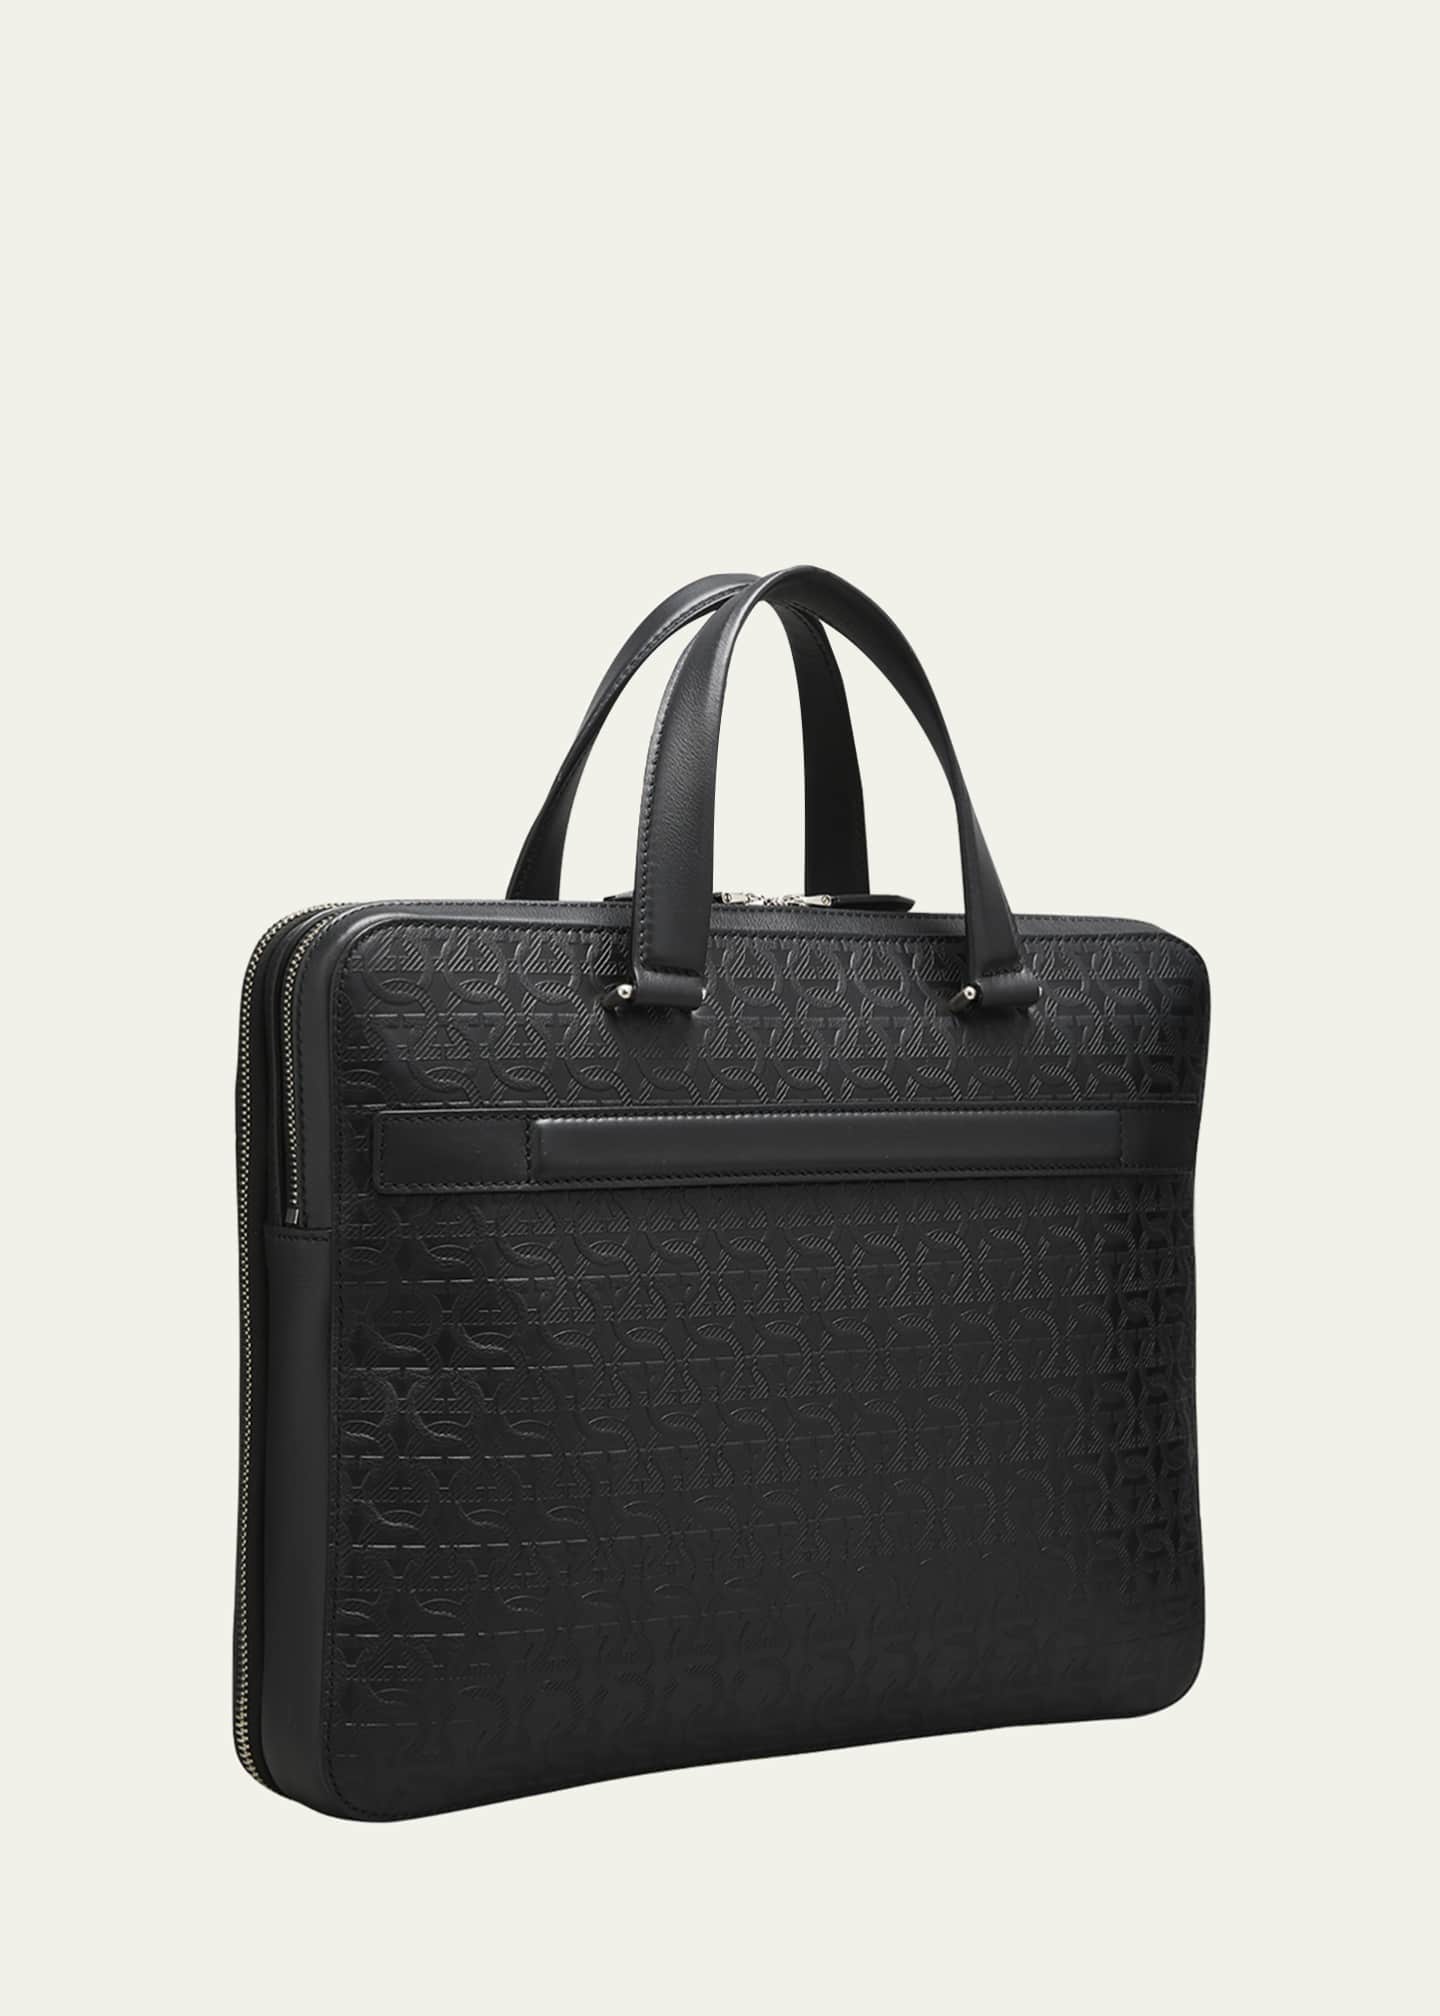 Gancini business bag, Briefcases, Men's